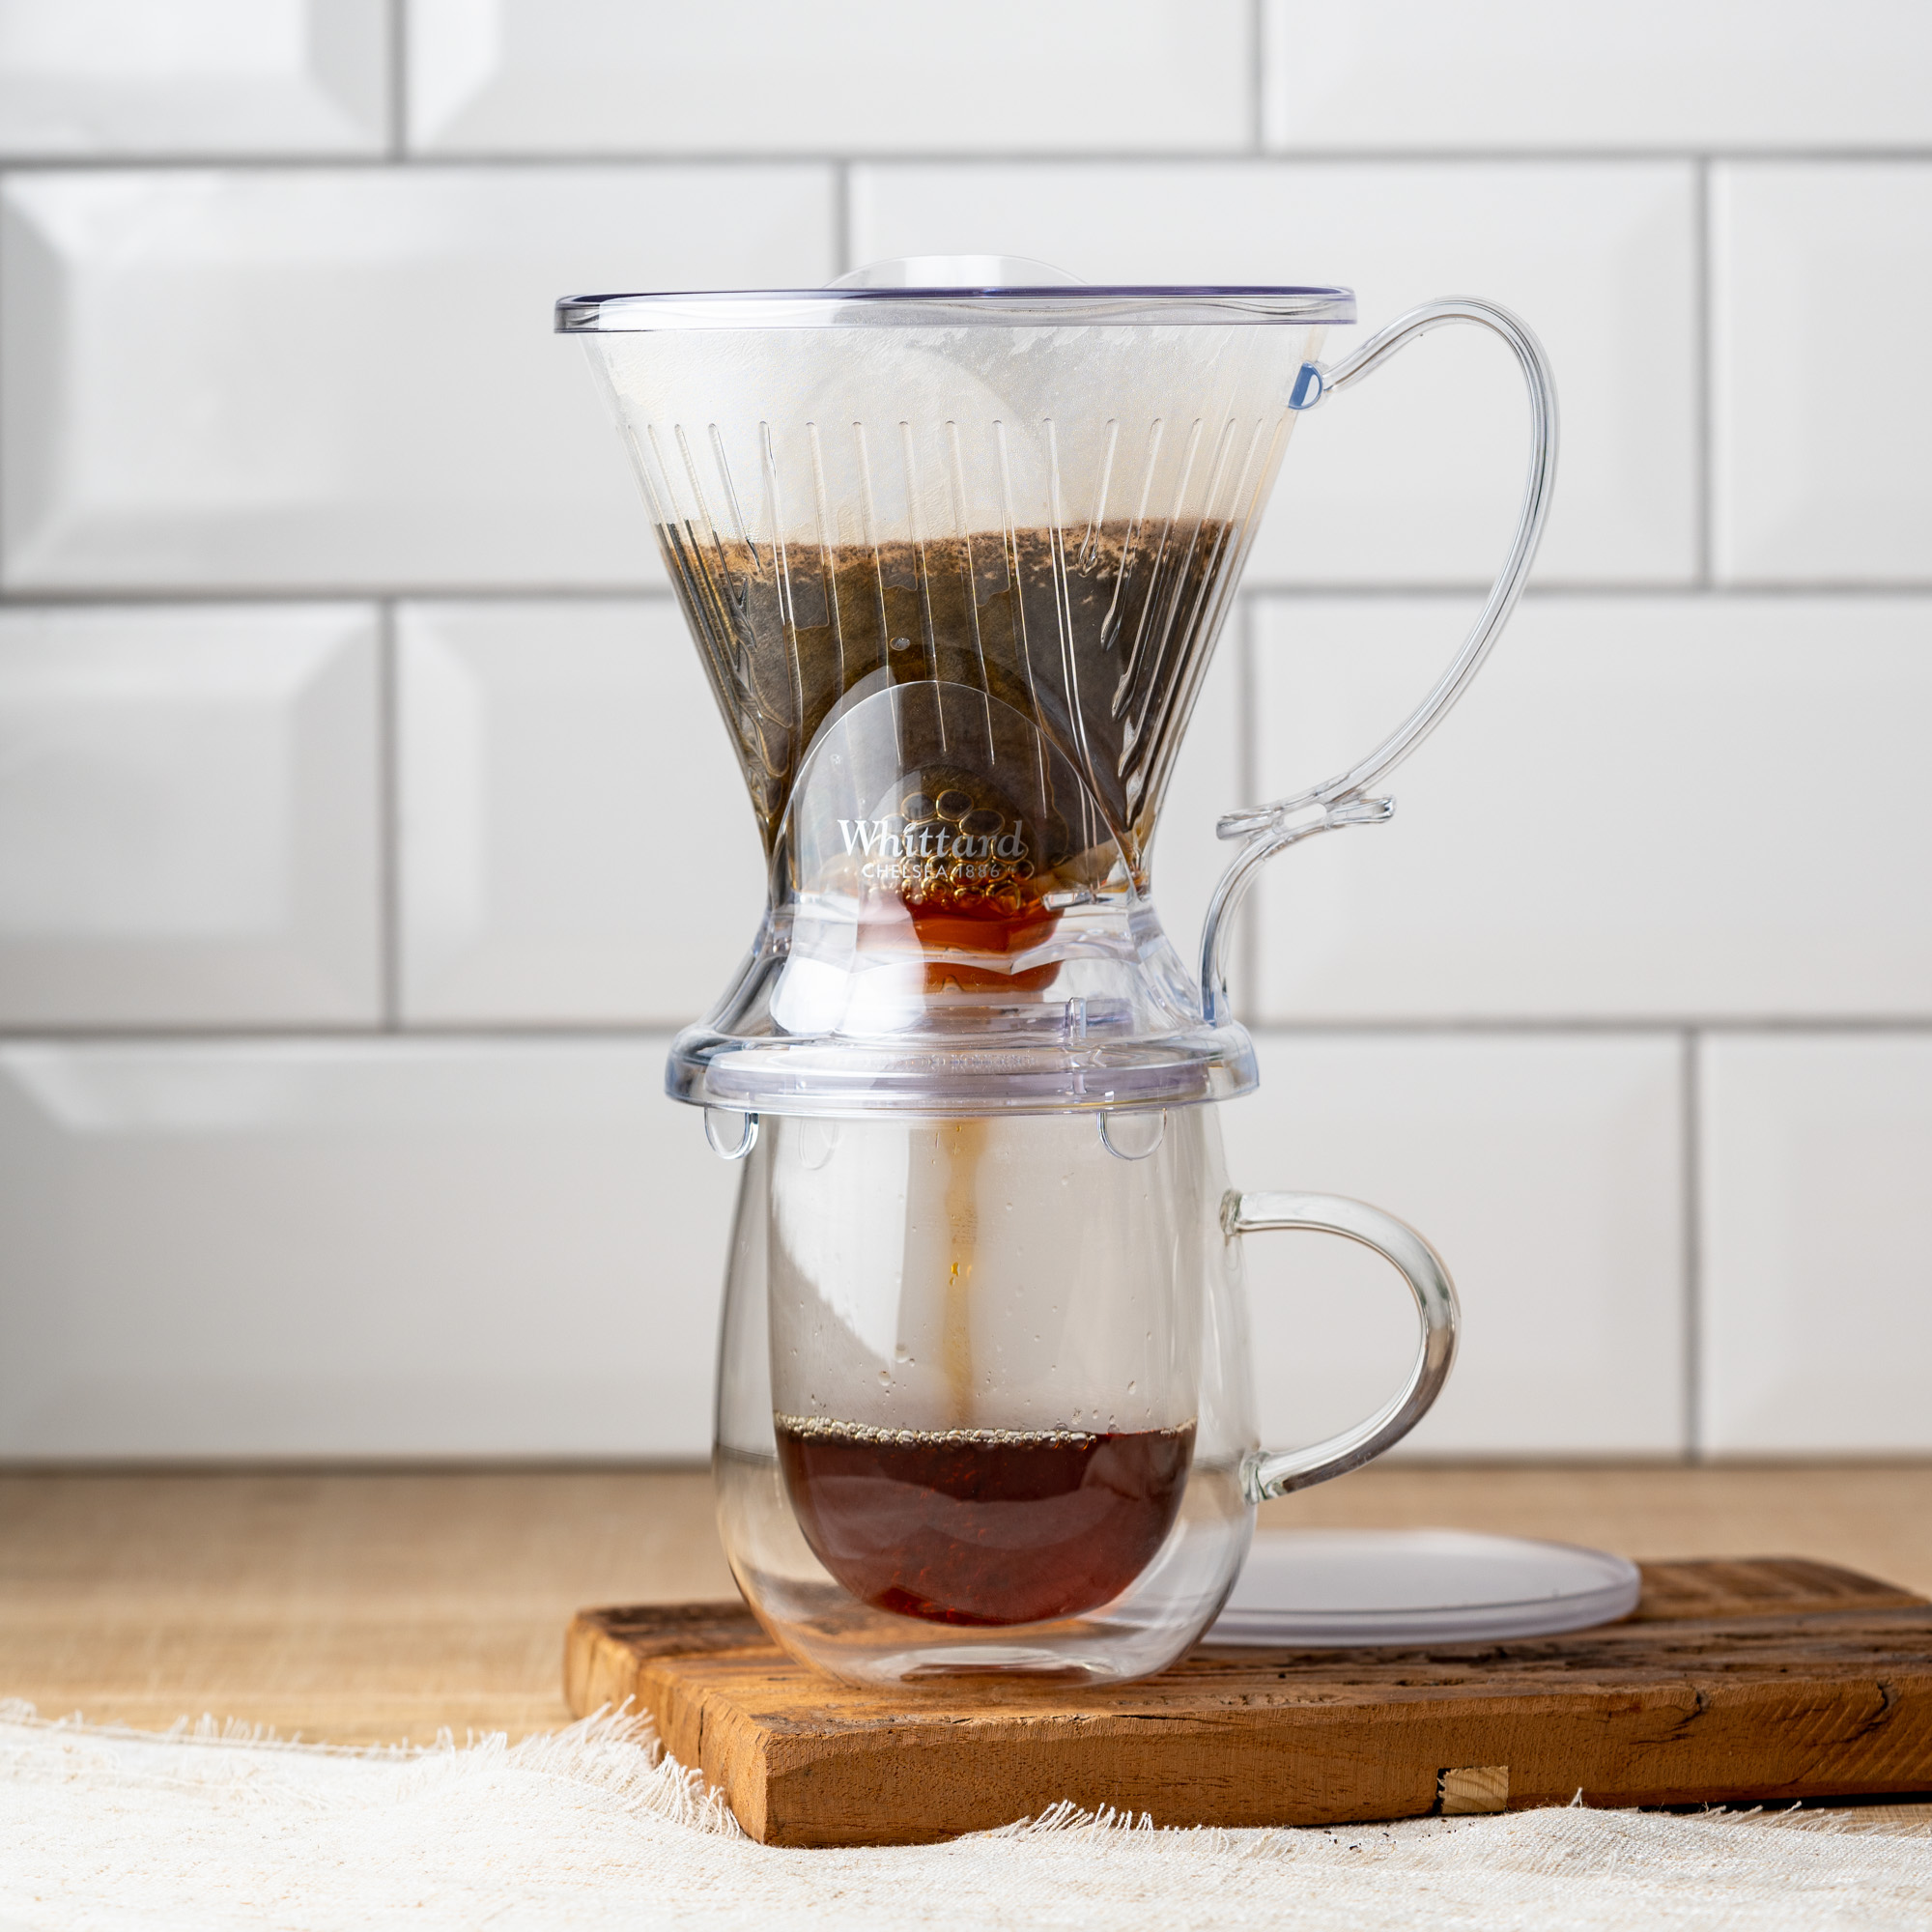 Clever Coffee Dripper Recipe — Clarity Coffee